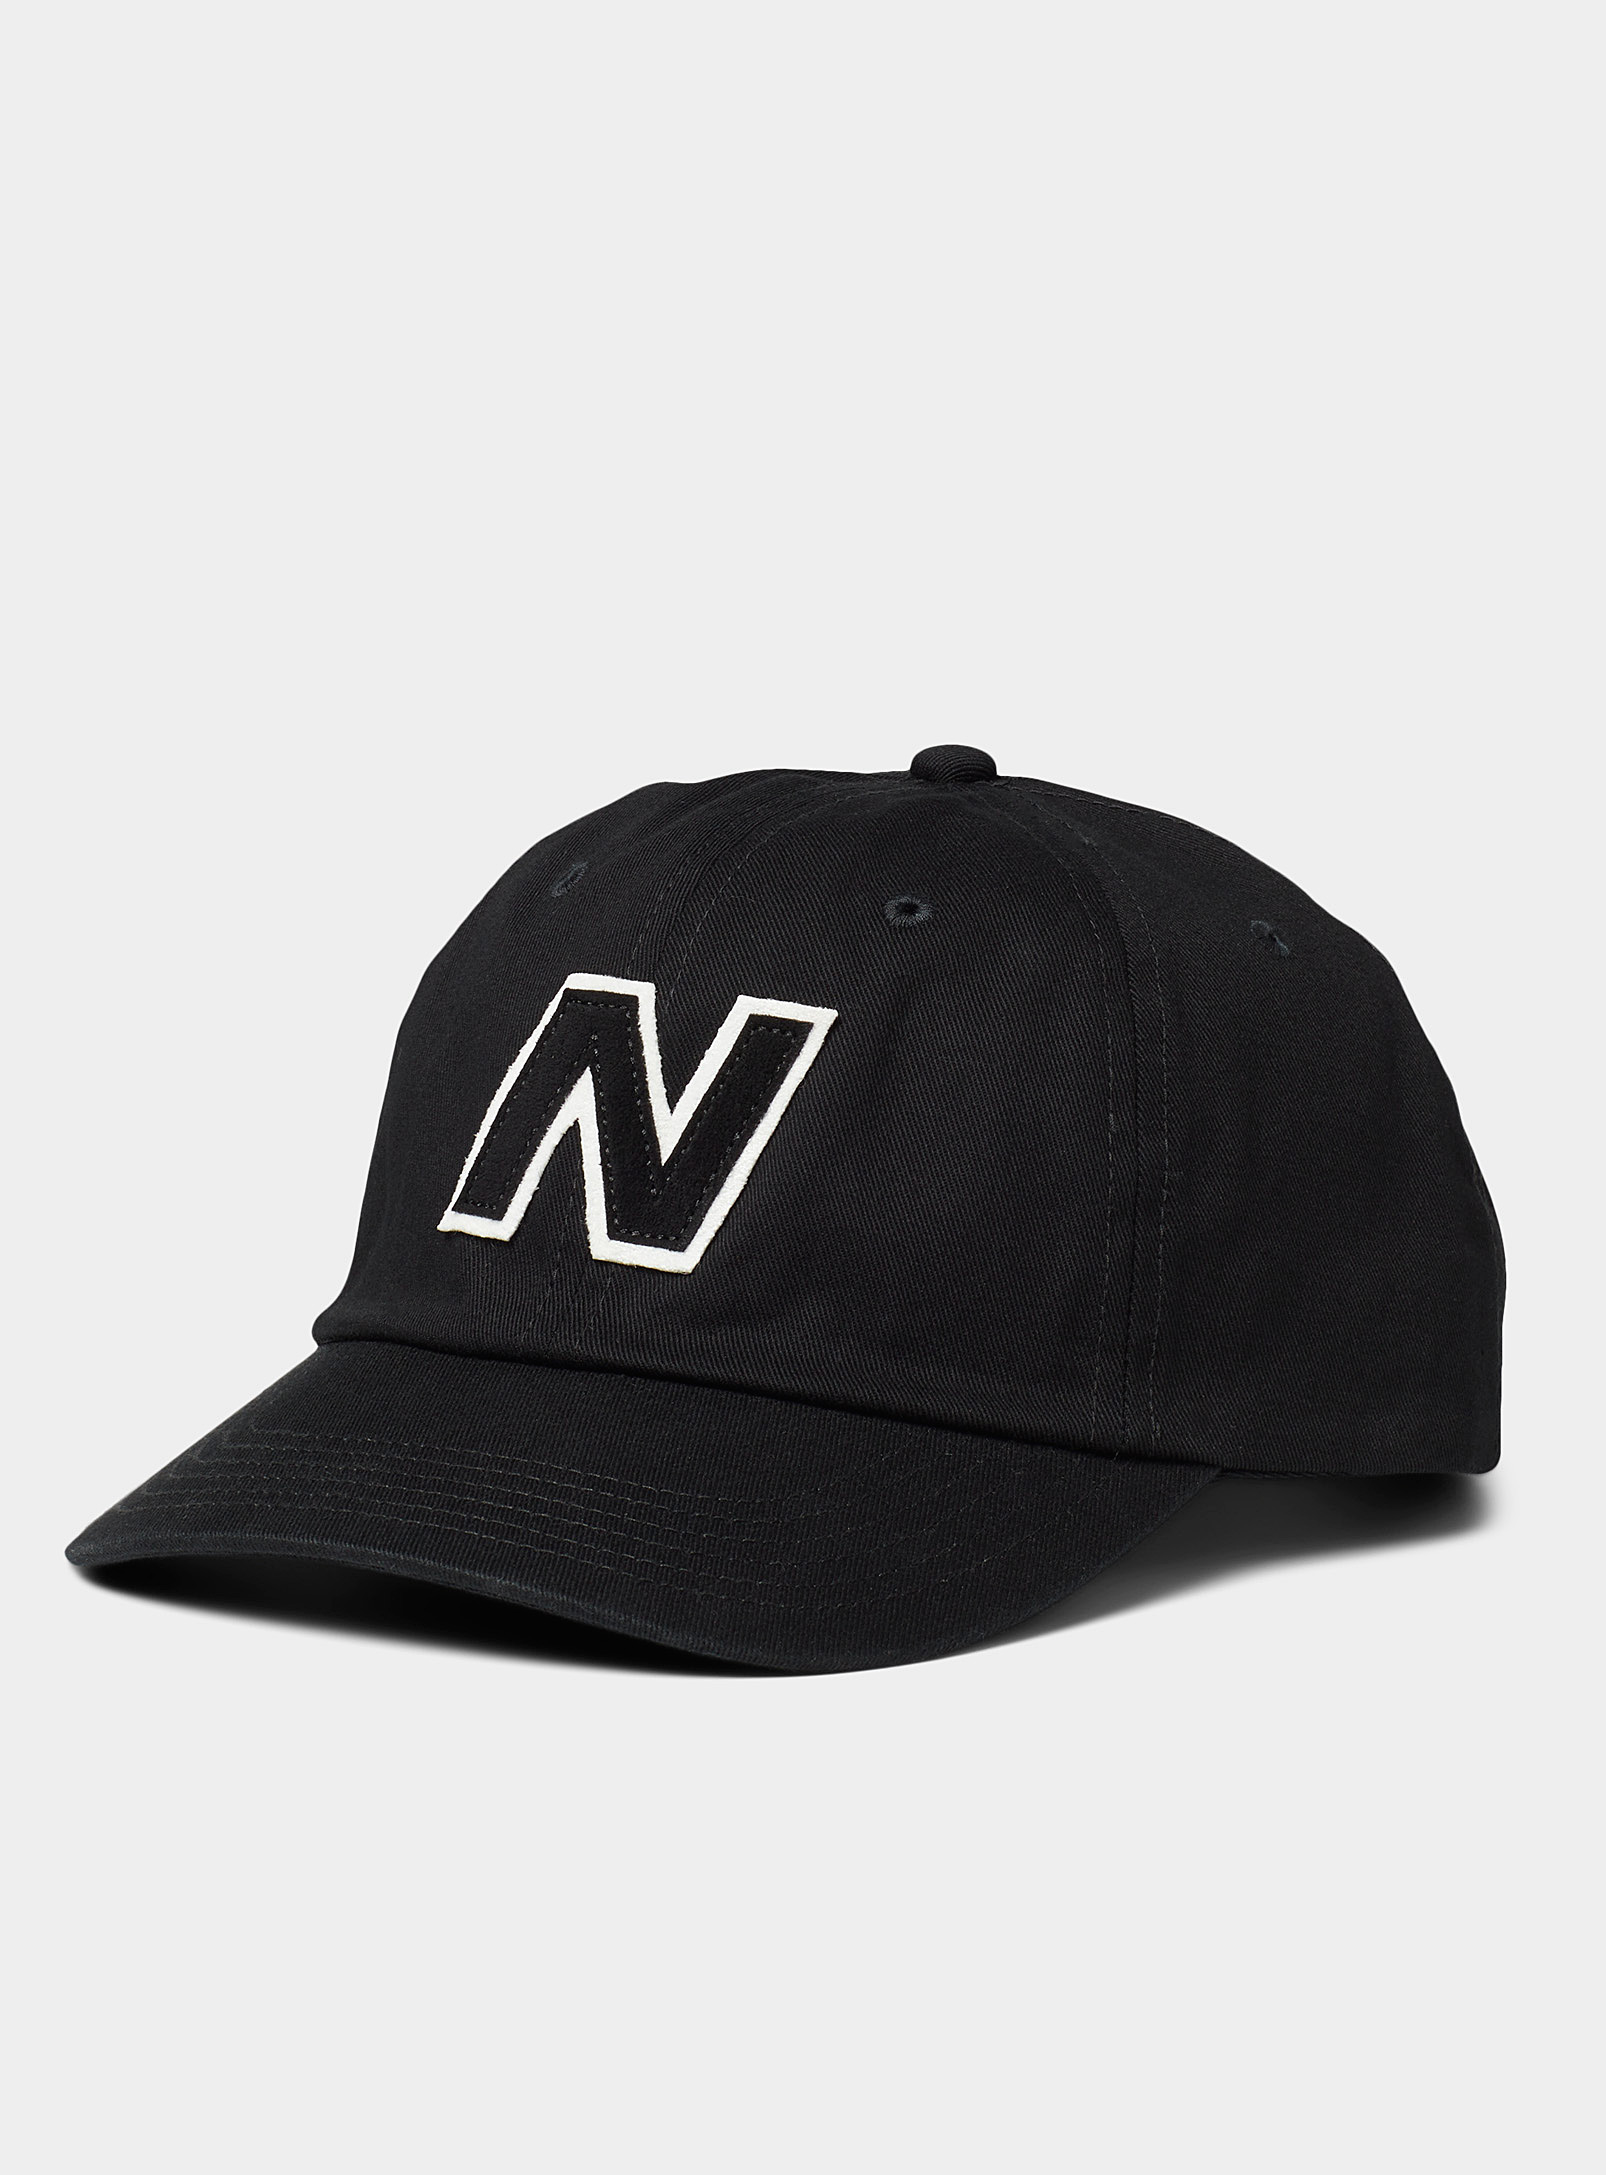 New Balance Logo Patch Baseball Cap In Black